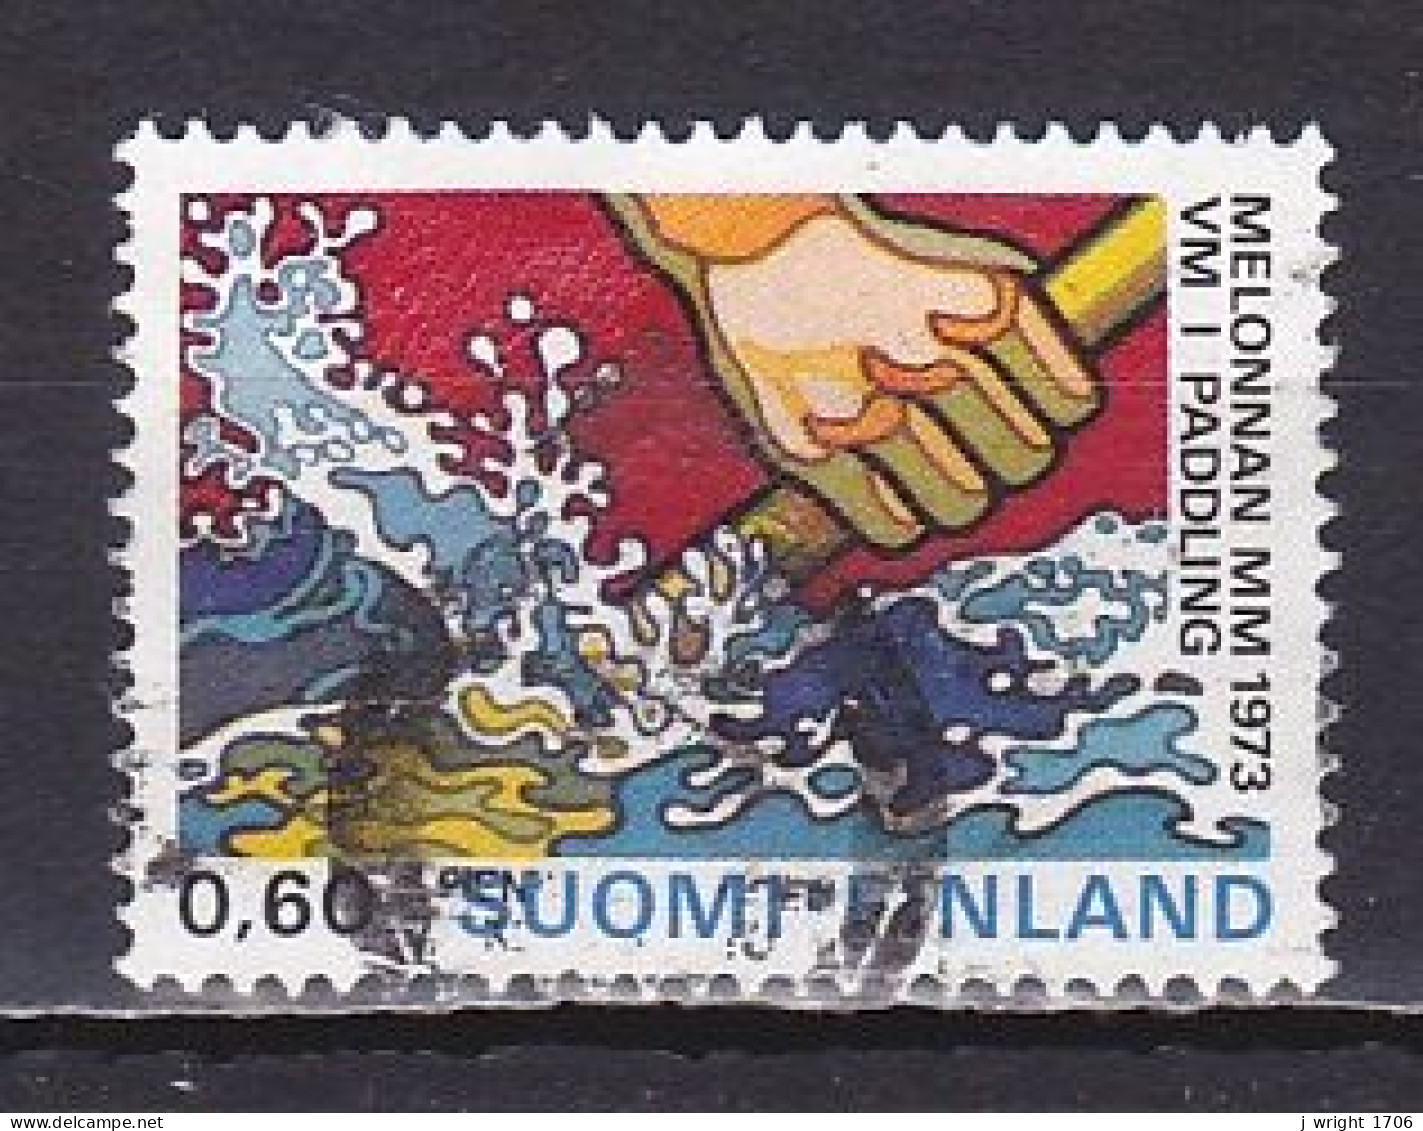 Finland, 1973, World Canoeing Championships, 0.60mk, USED - Usati